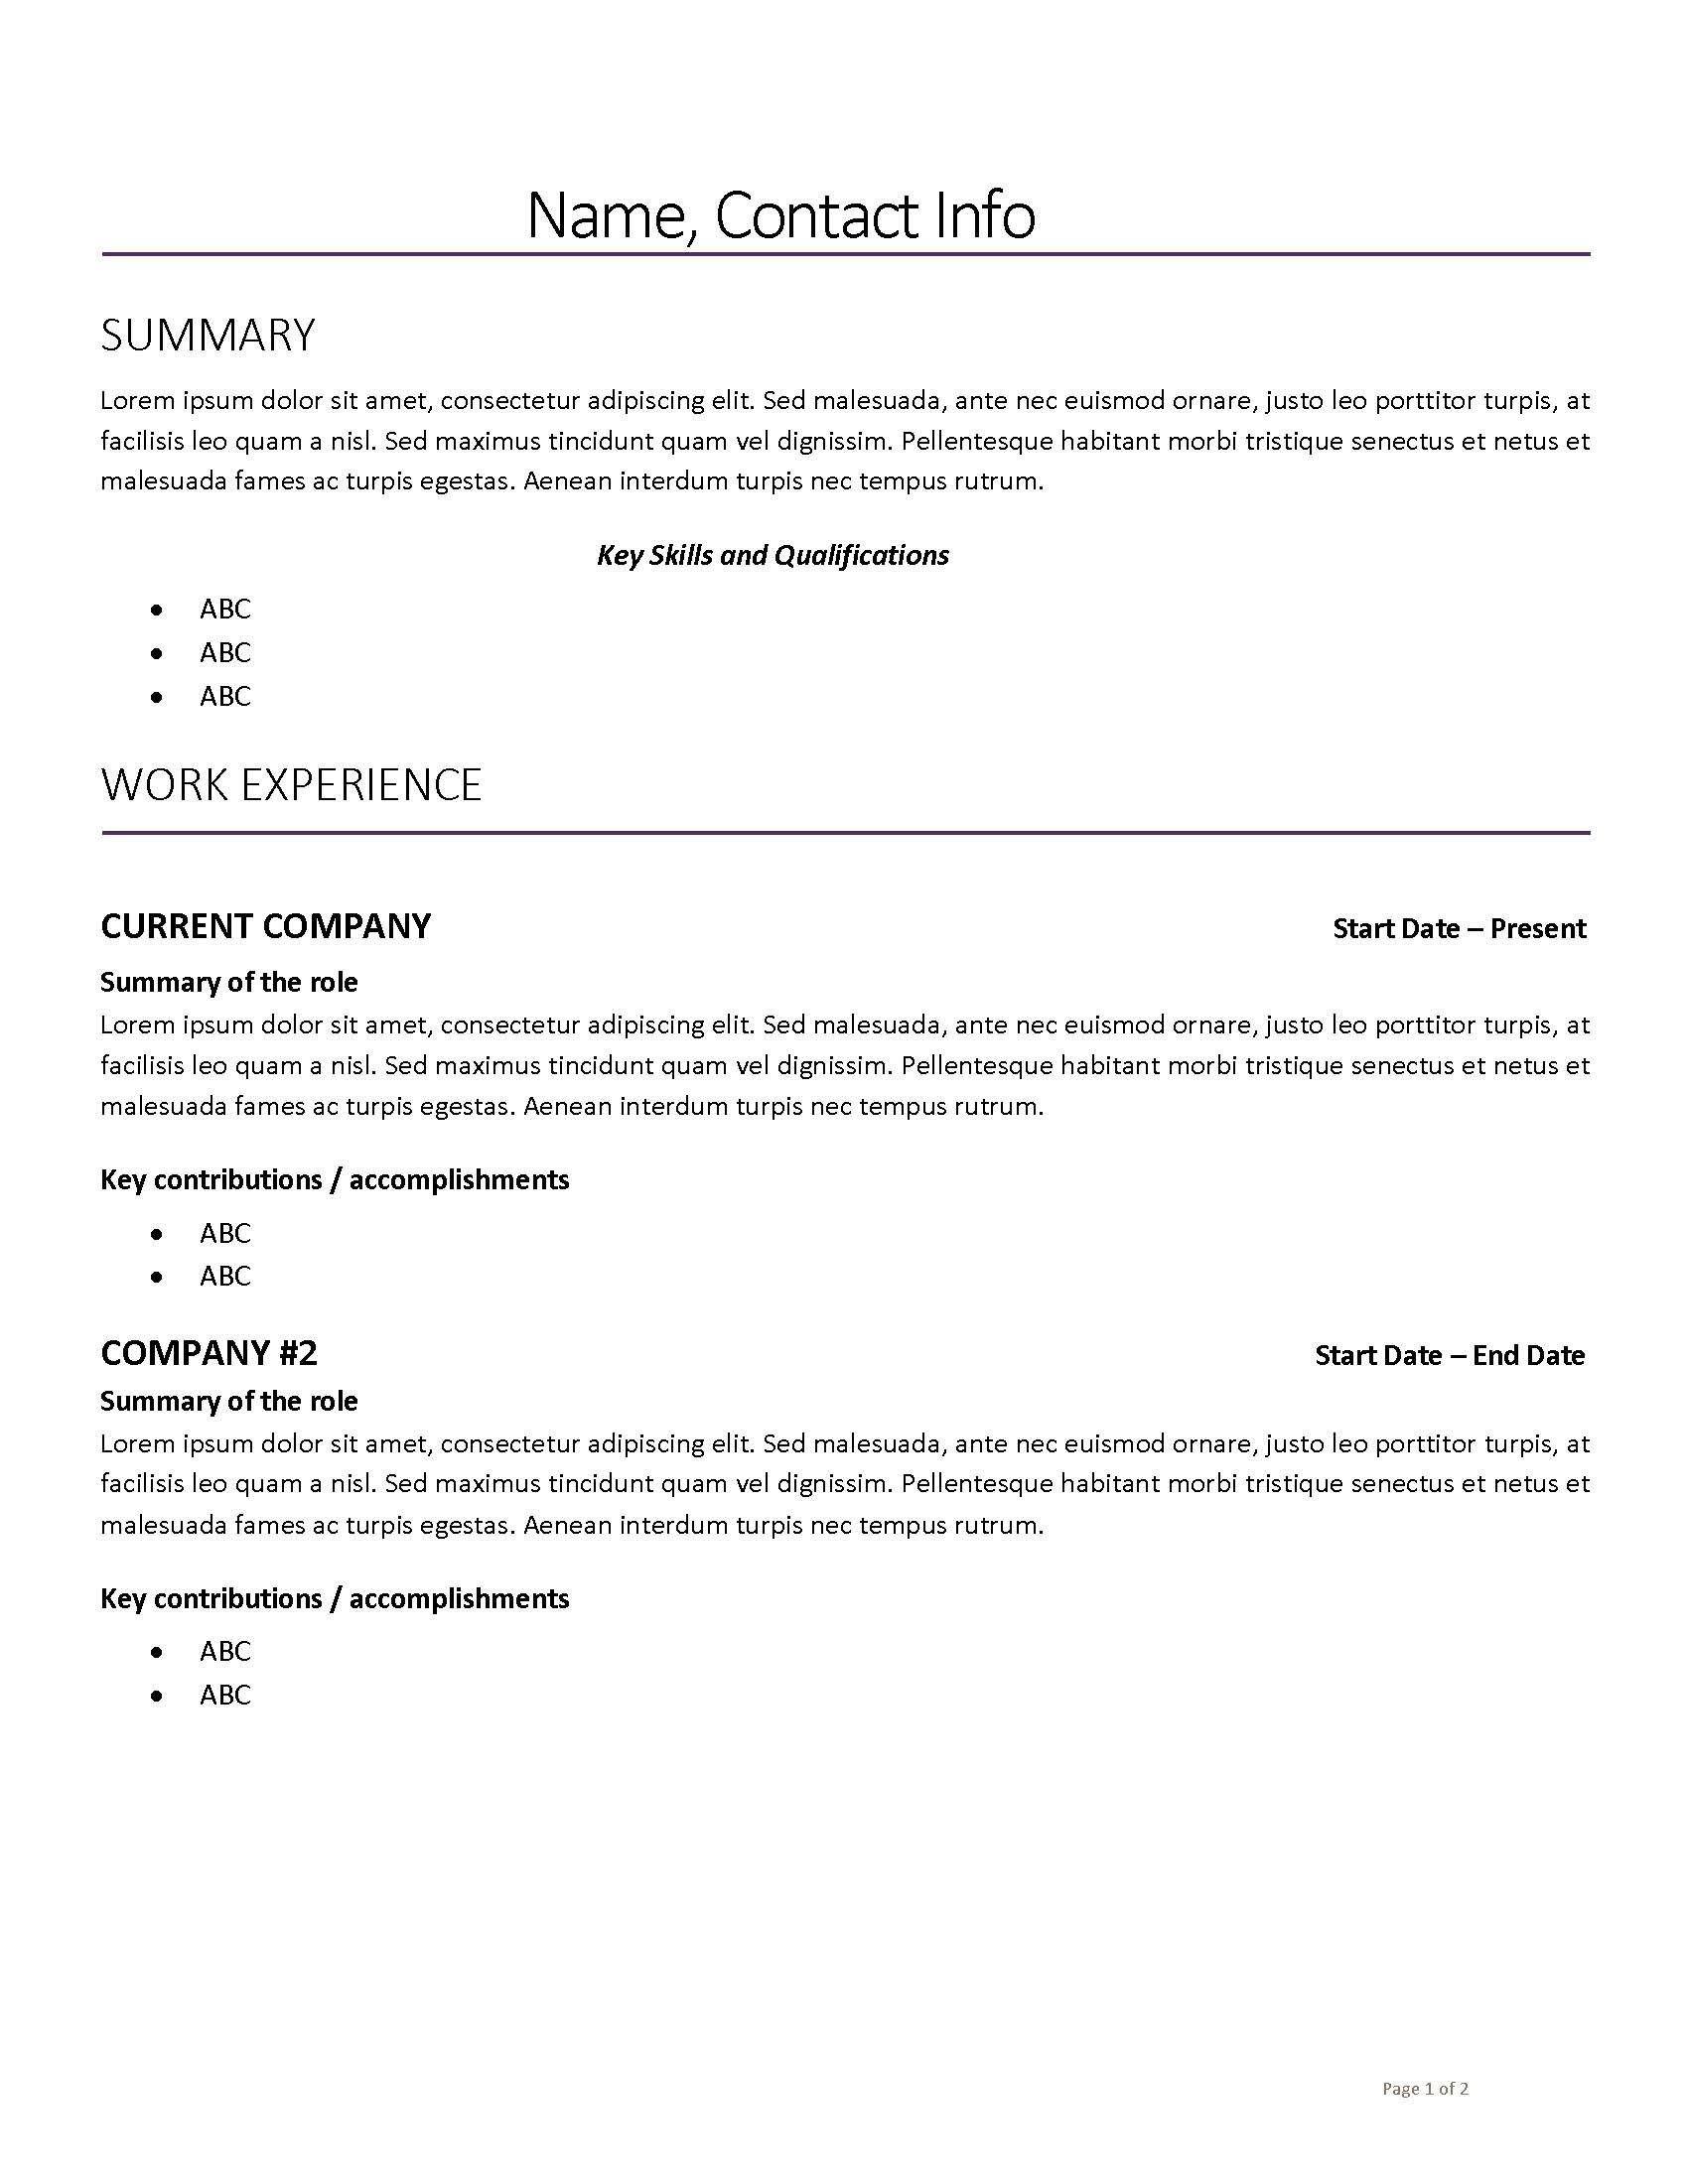 Resume - part 1